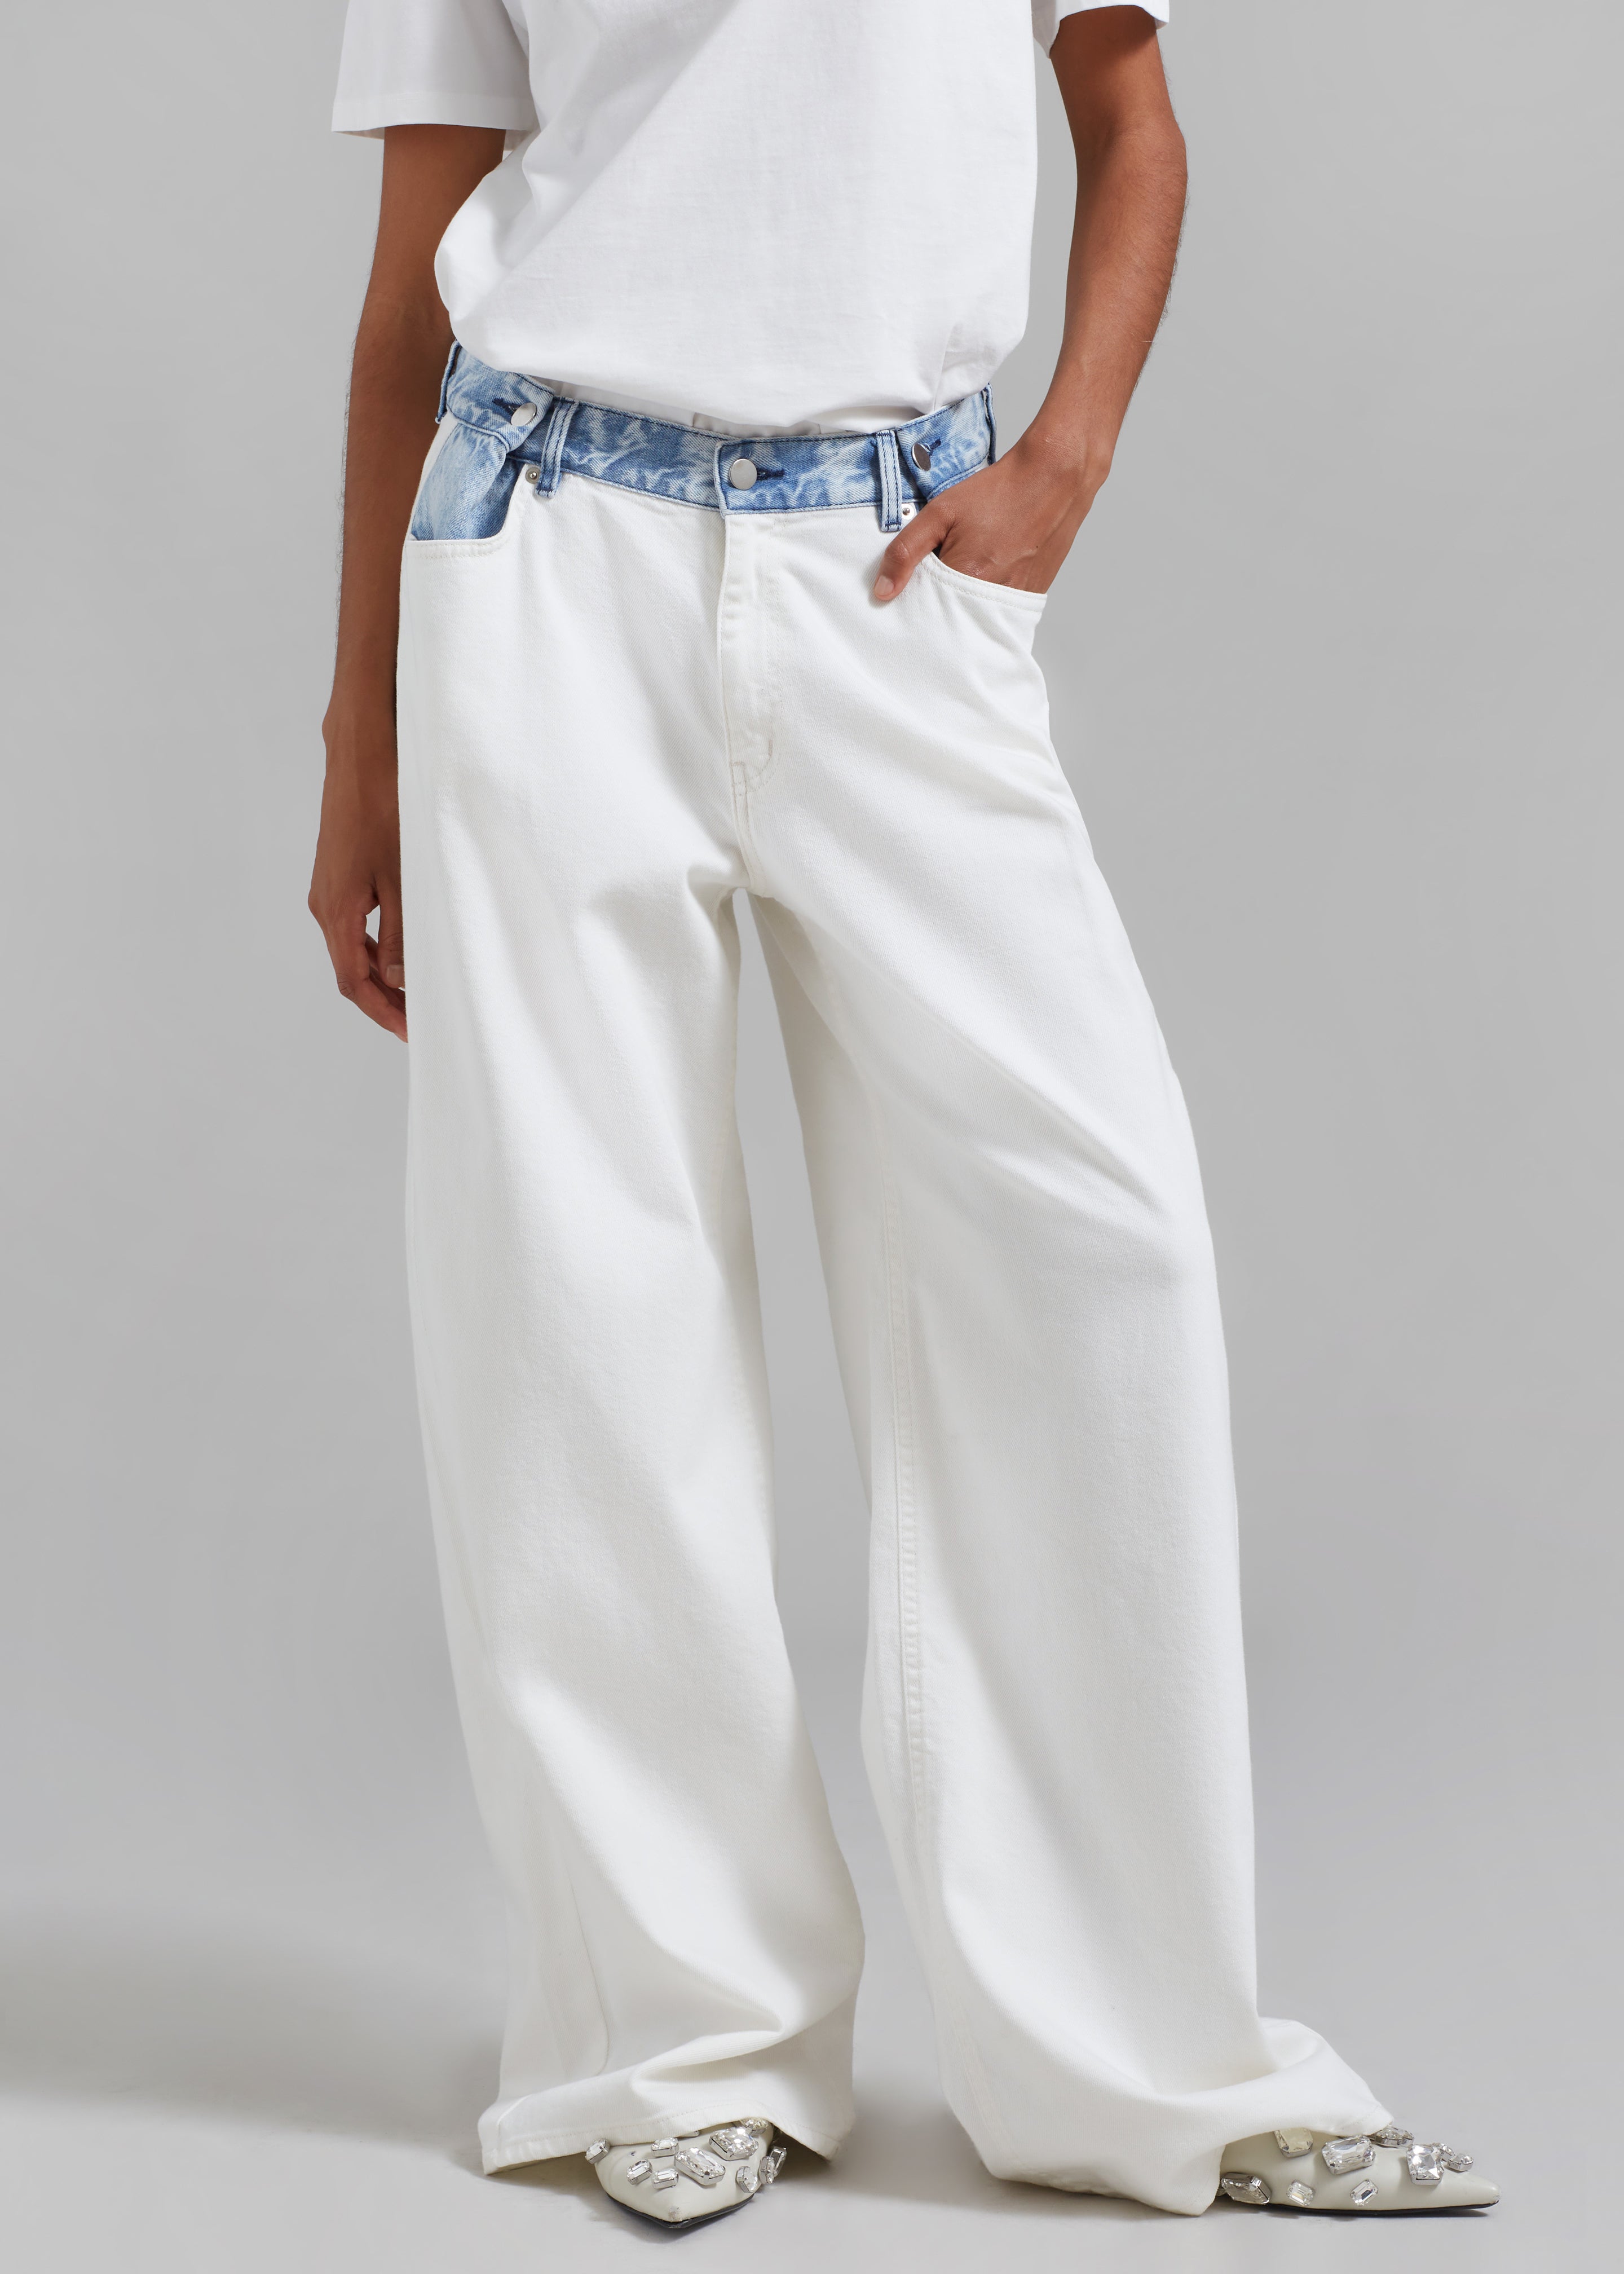 Hayla Contrast Denim Pants - Off White/Blue - 2